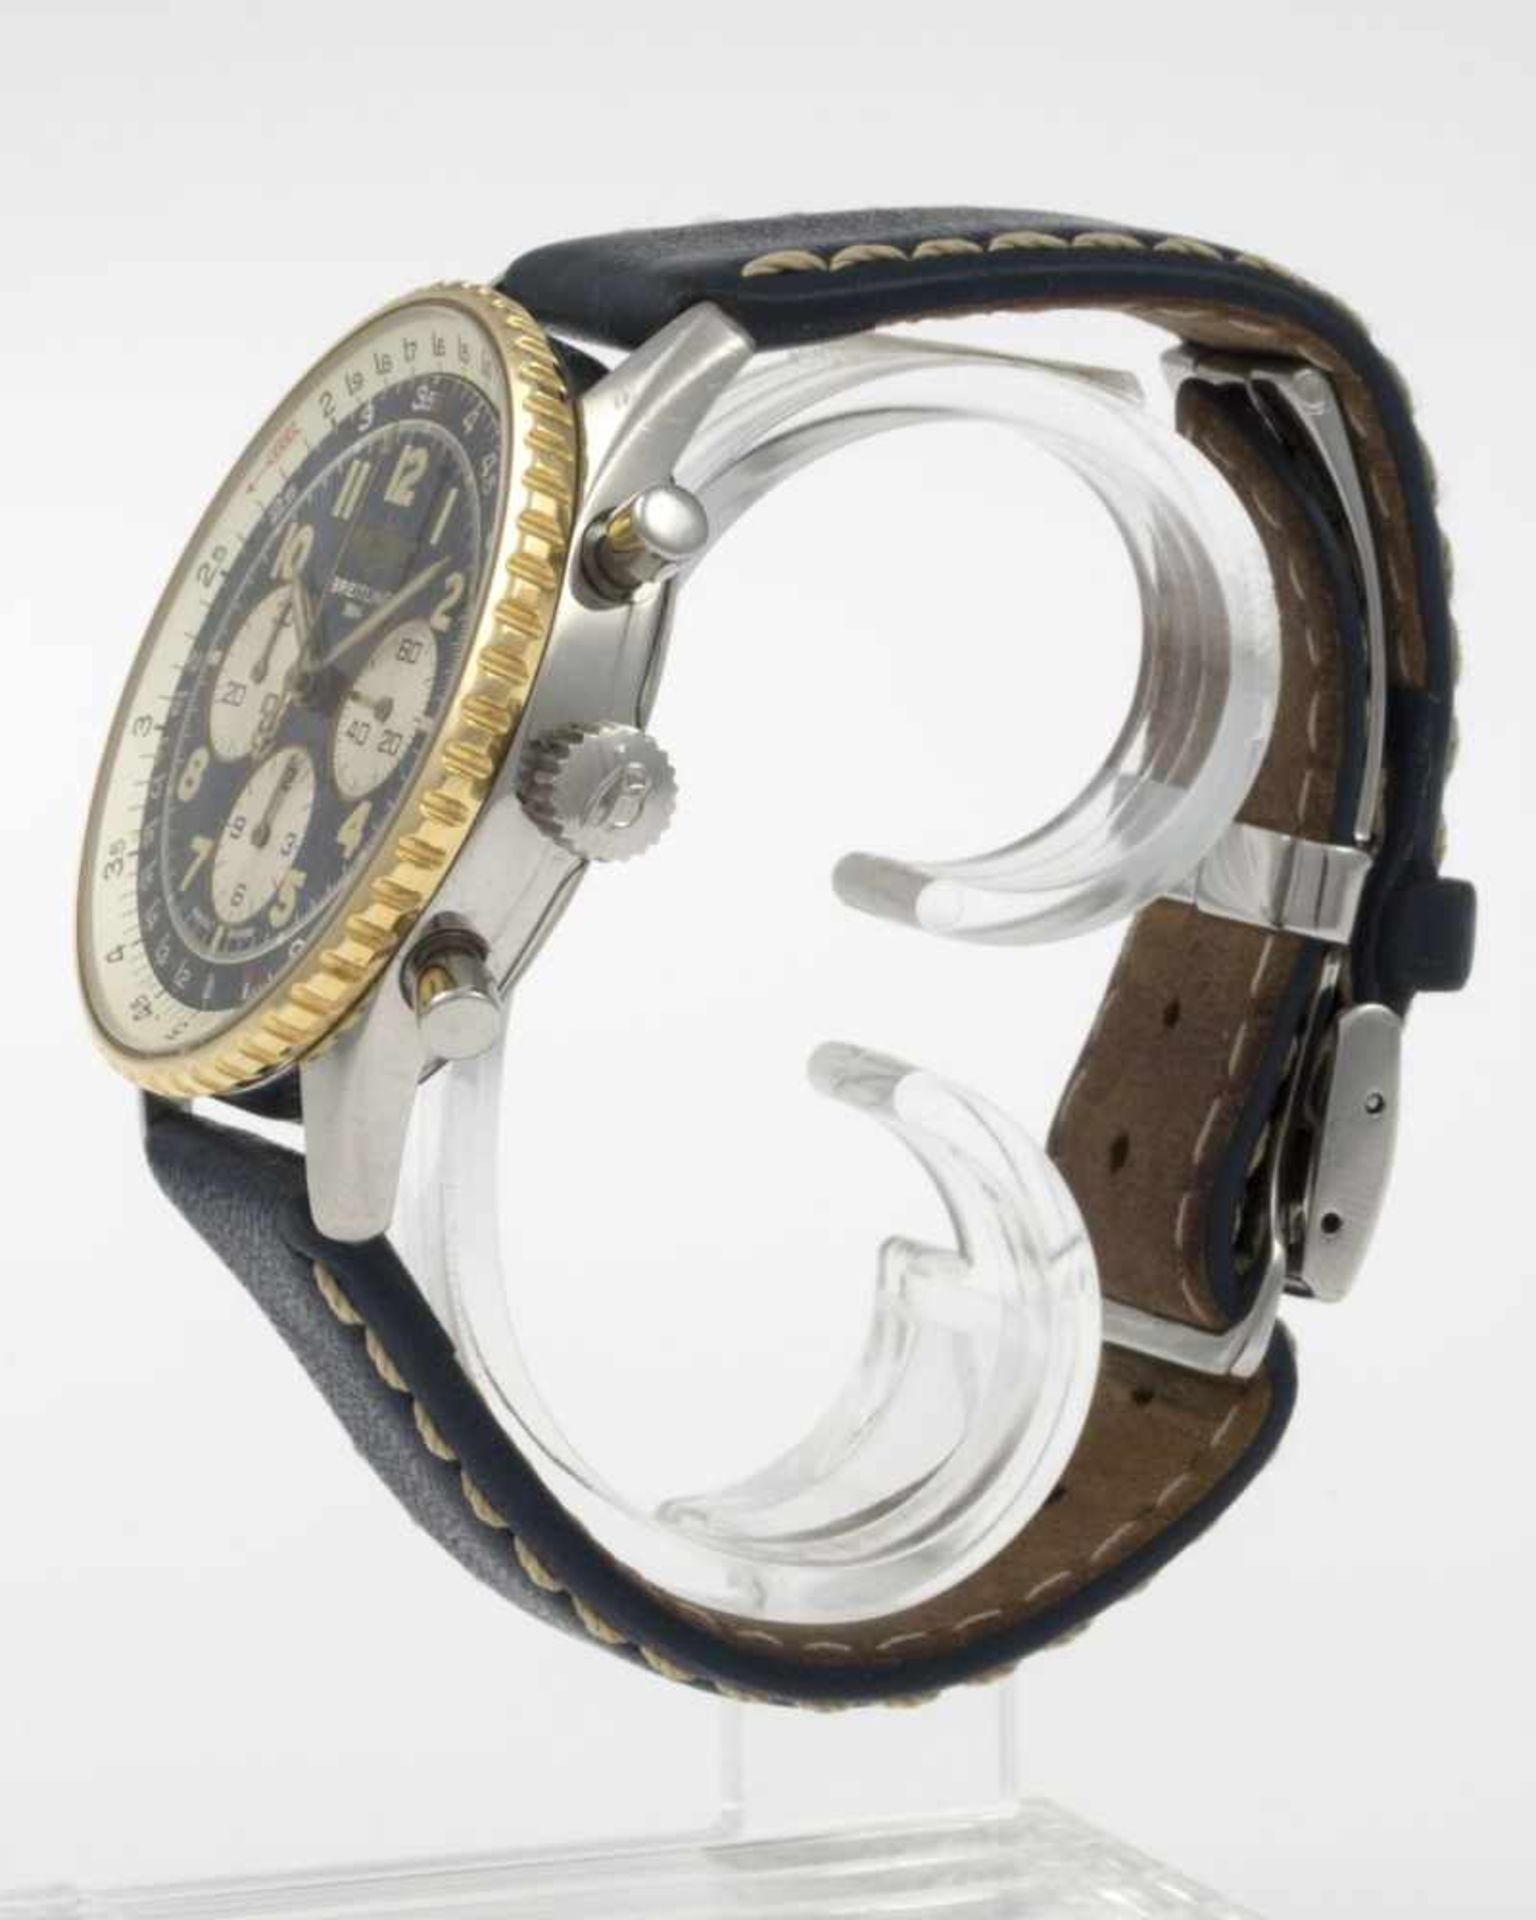 Breitling-Armbanduhr Chronograph Navitimer 92Gehäuse aus Stahl. Beidseitig drehbare Lünette aus - Bild 2 aus 5